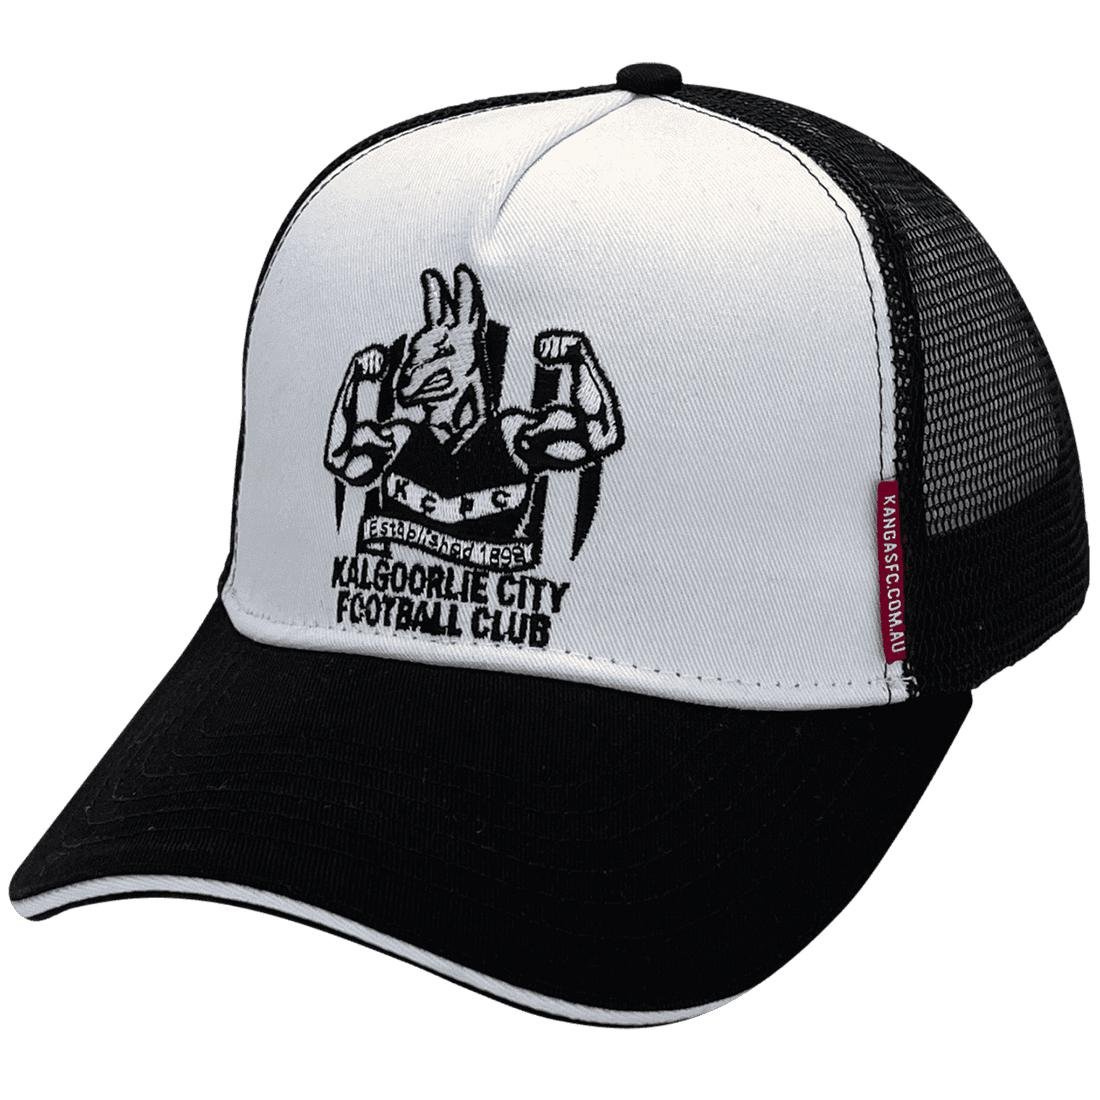 Kalgoorlie City Football Club WA Custom Basic Trucker Hat